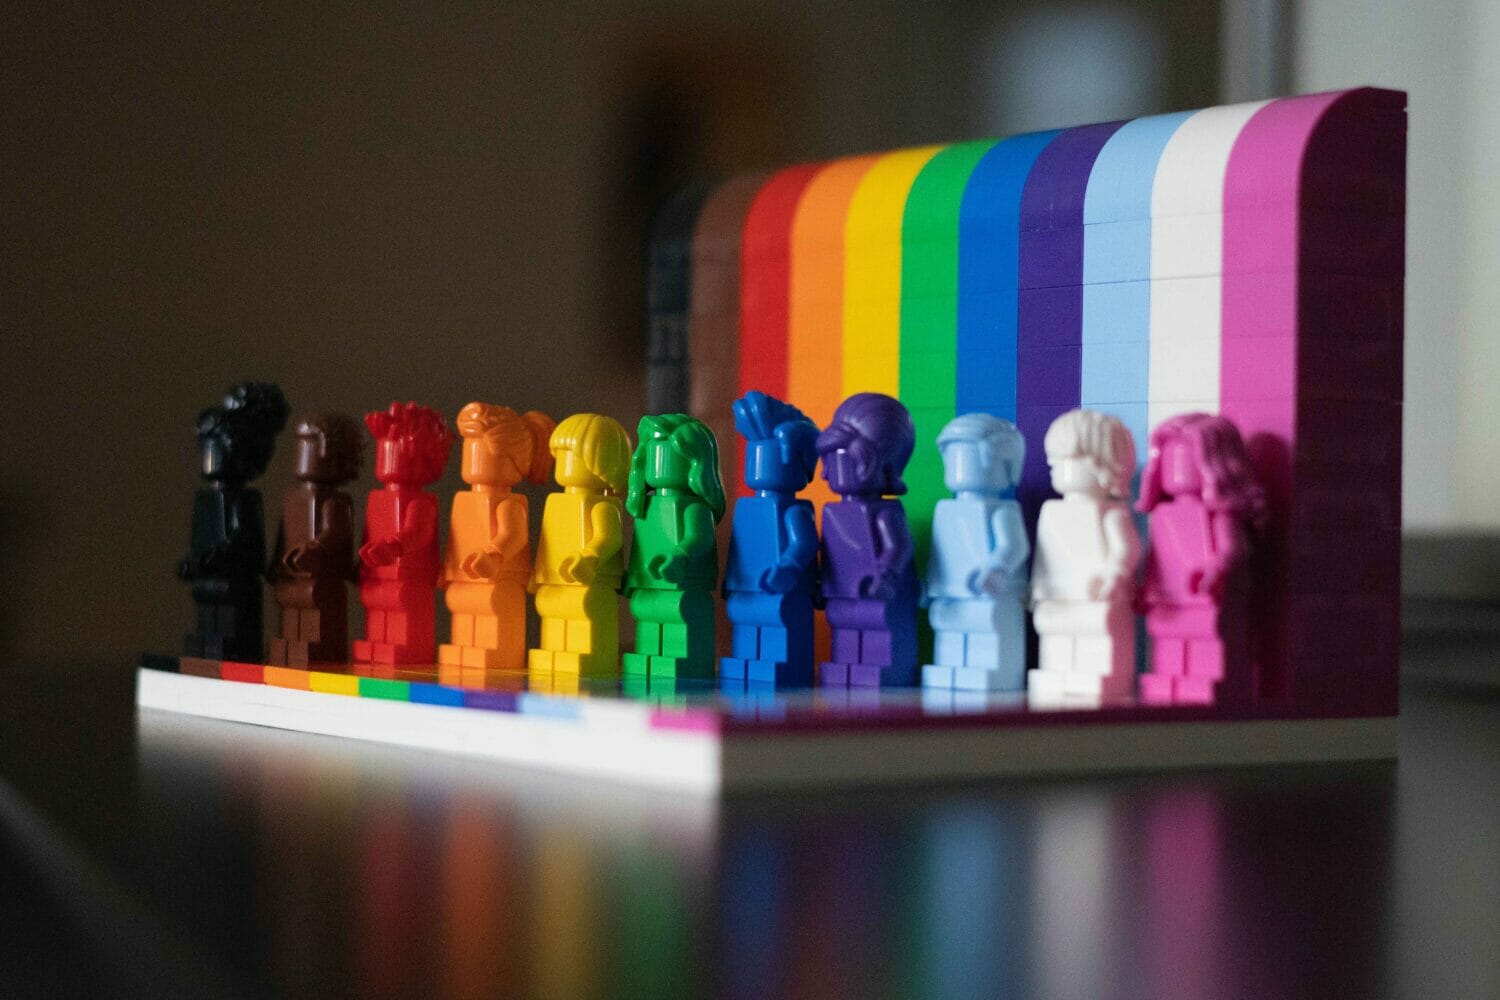 Lego in rainbow colors